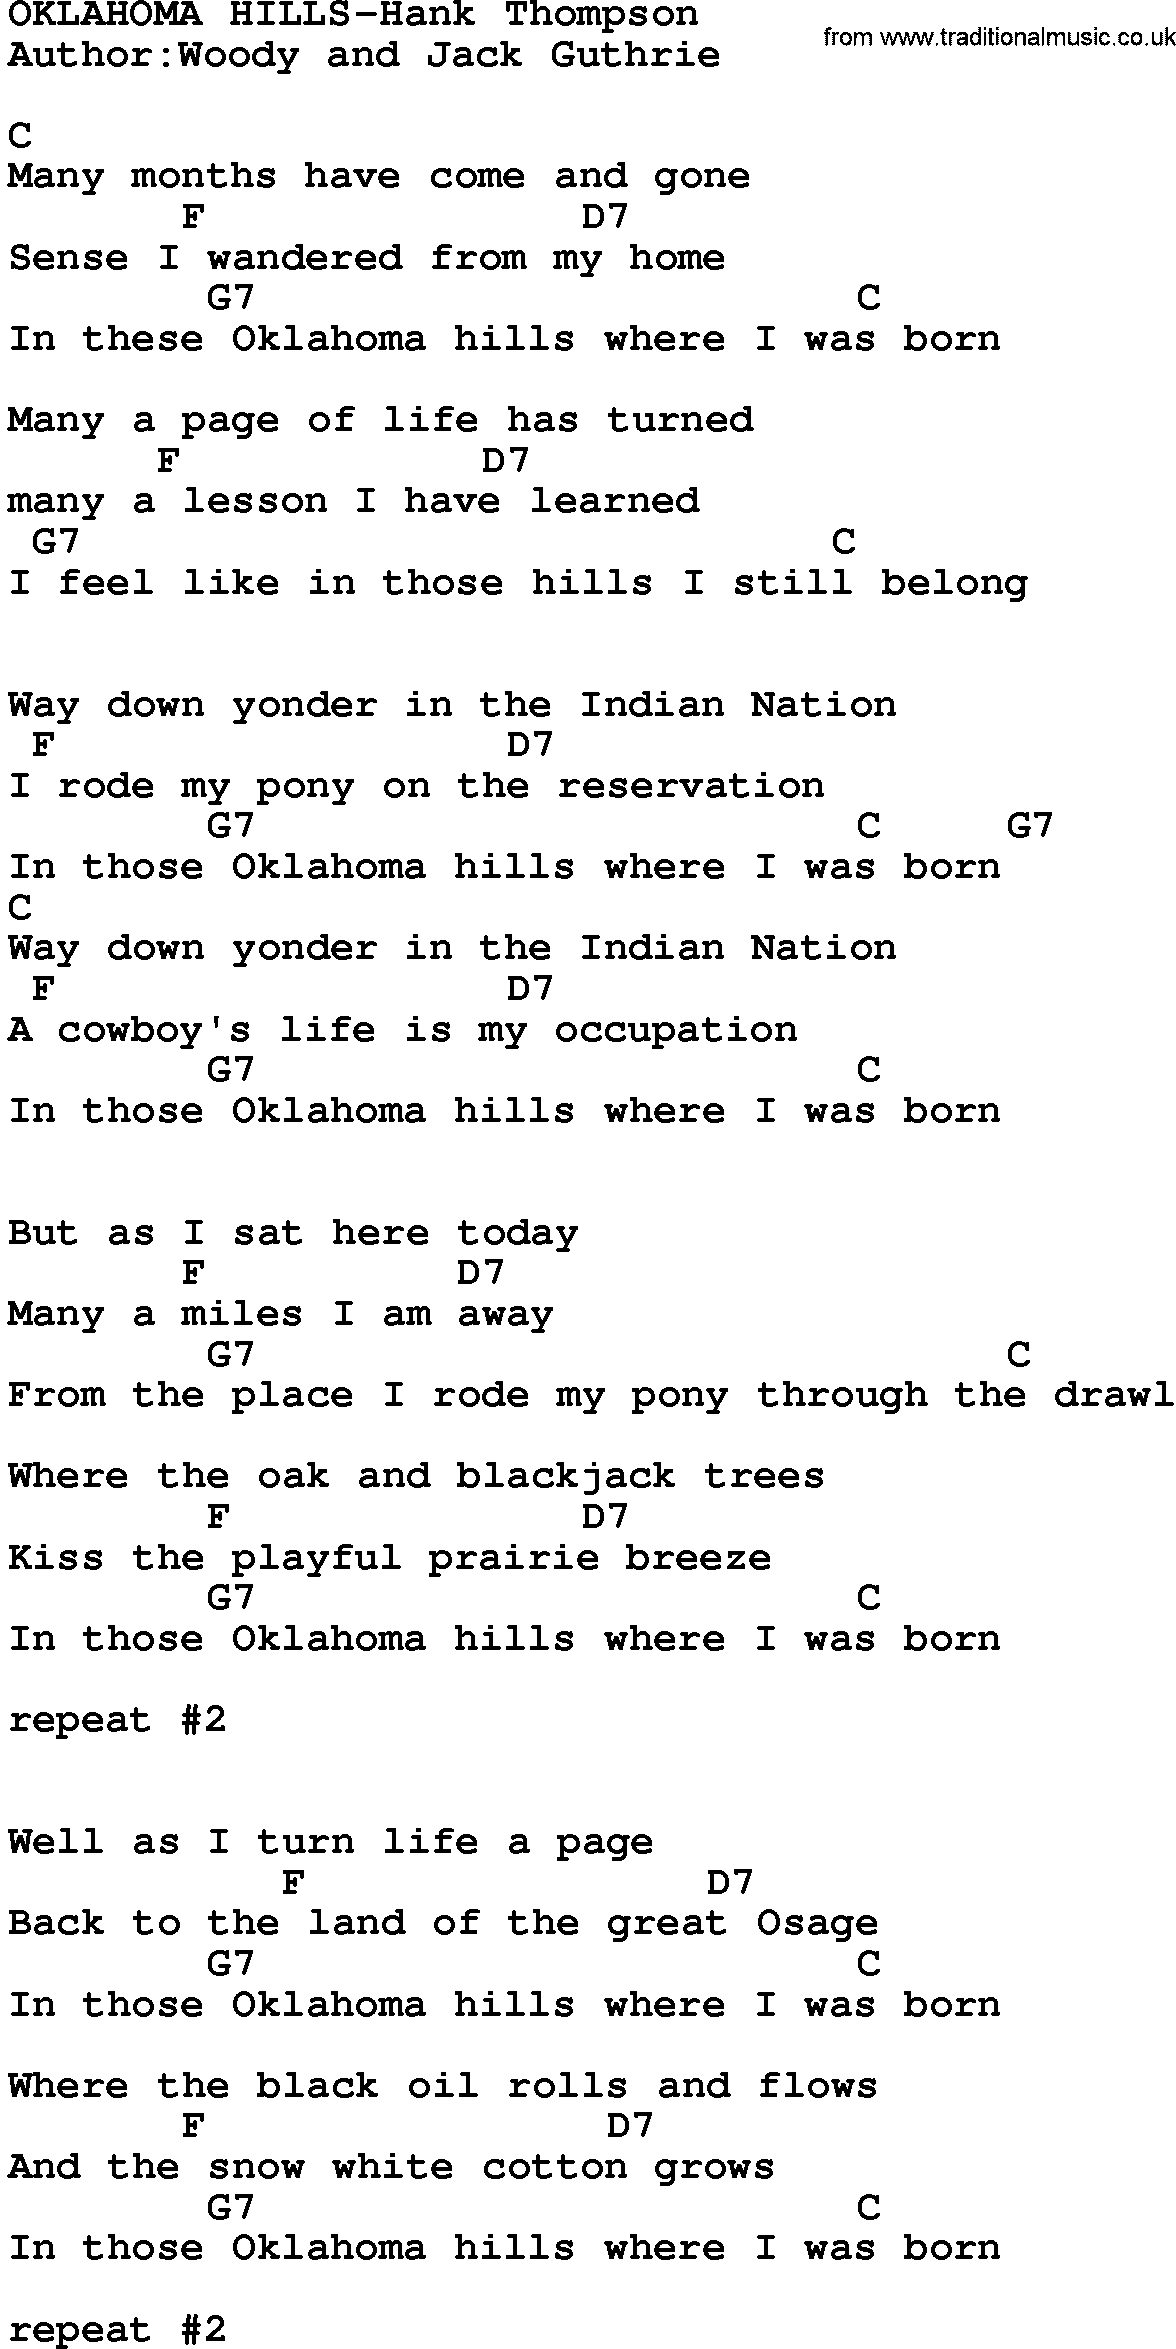 Country music song: Oklahoma Hills-Hank Thompson lyrics and chords